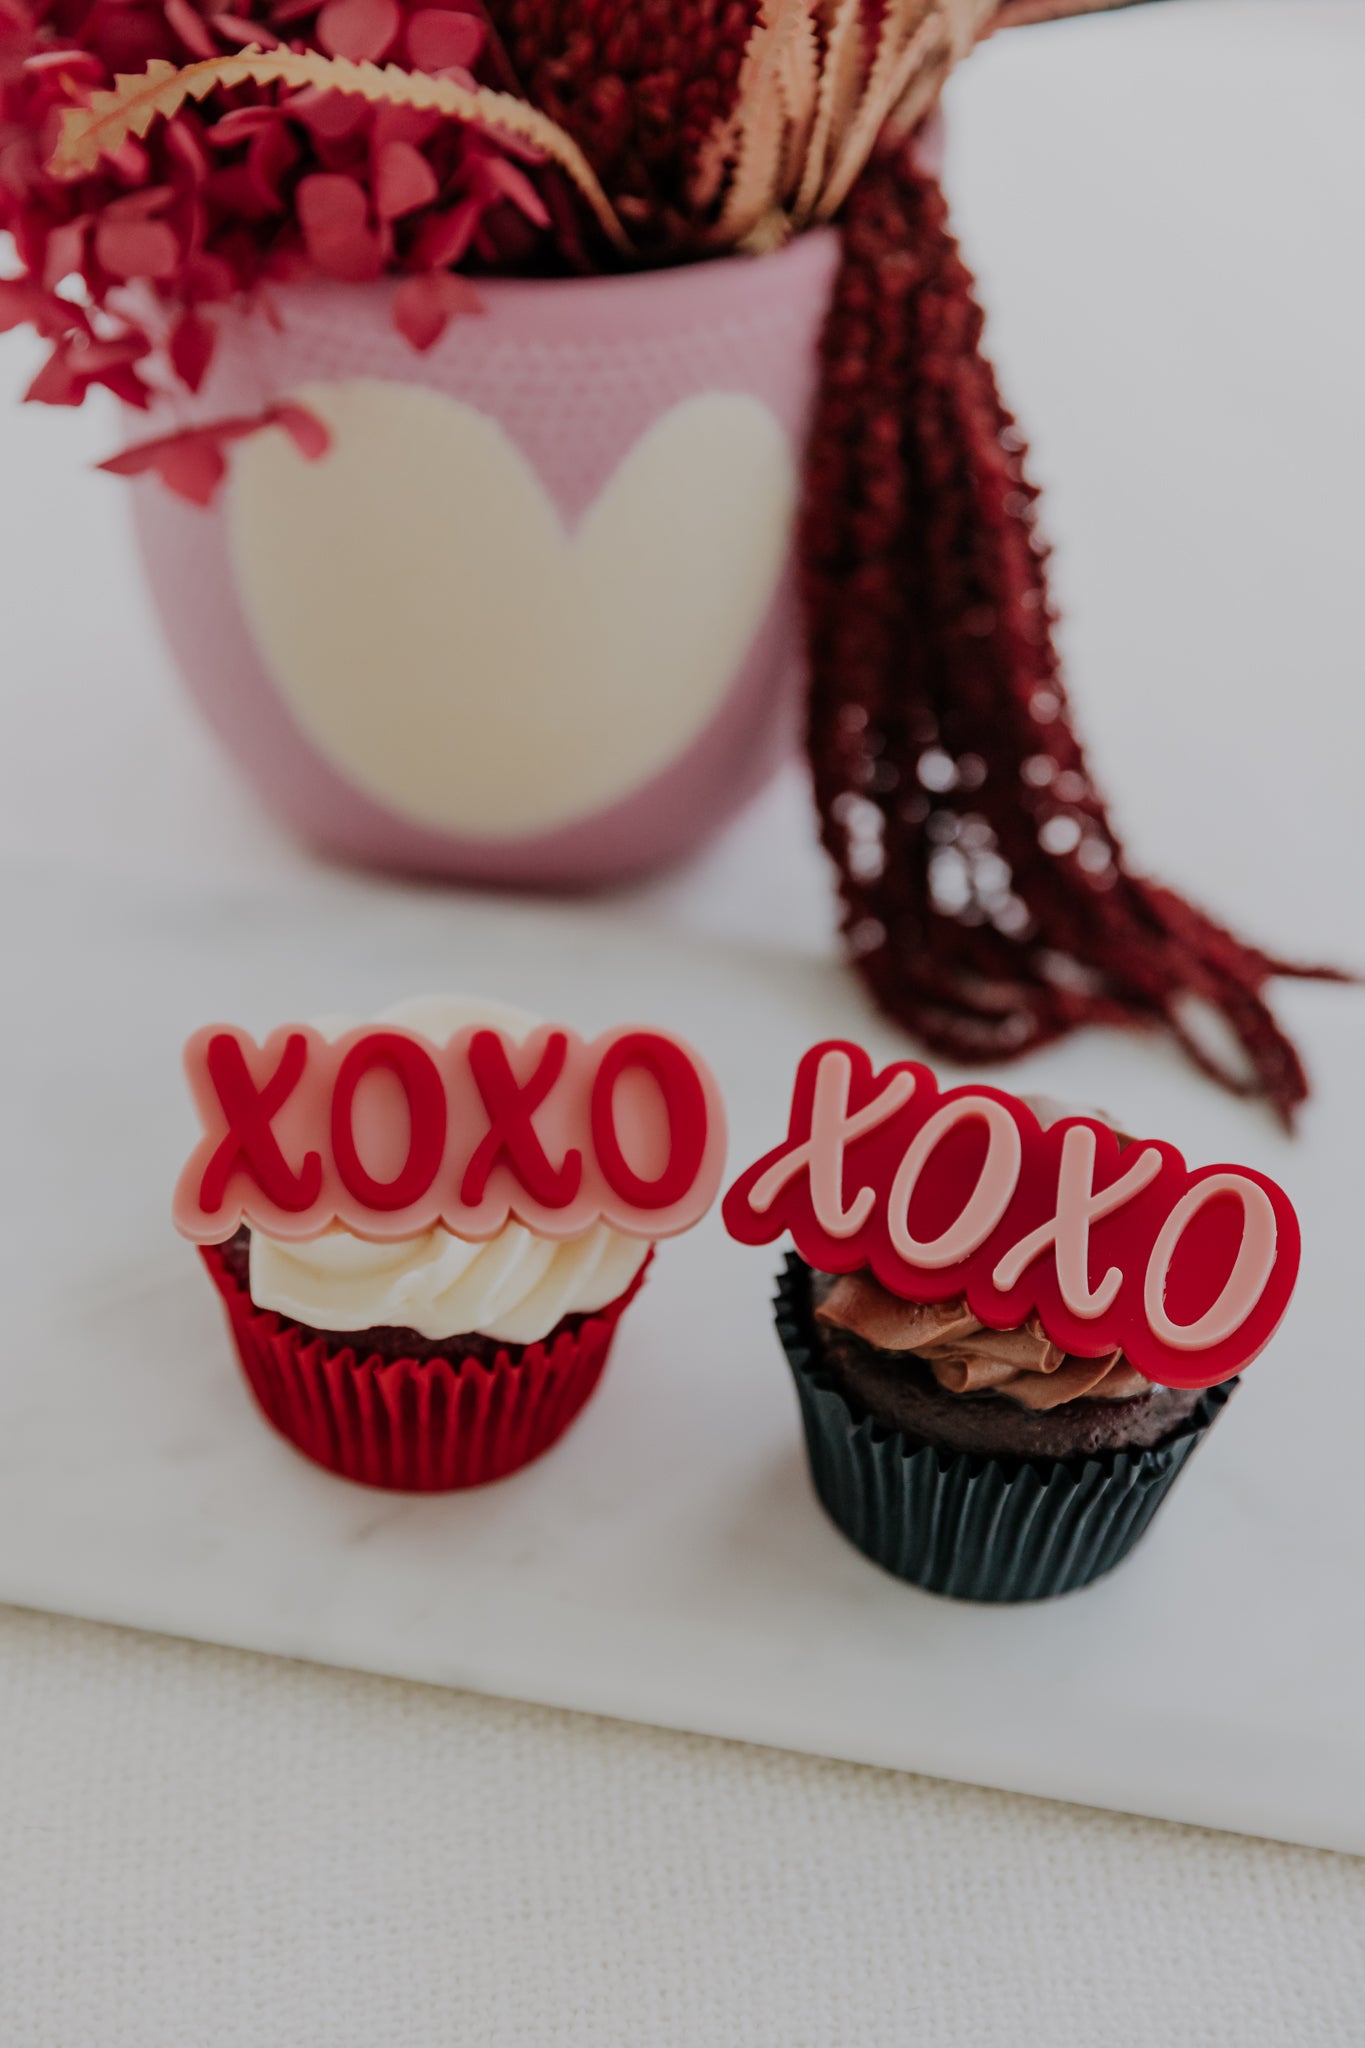 Valentine's Day Cake Charm - "XOXO"